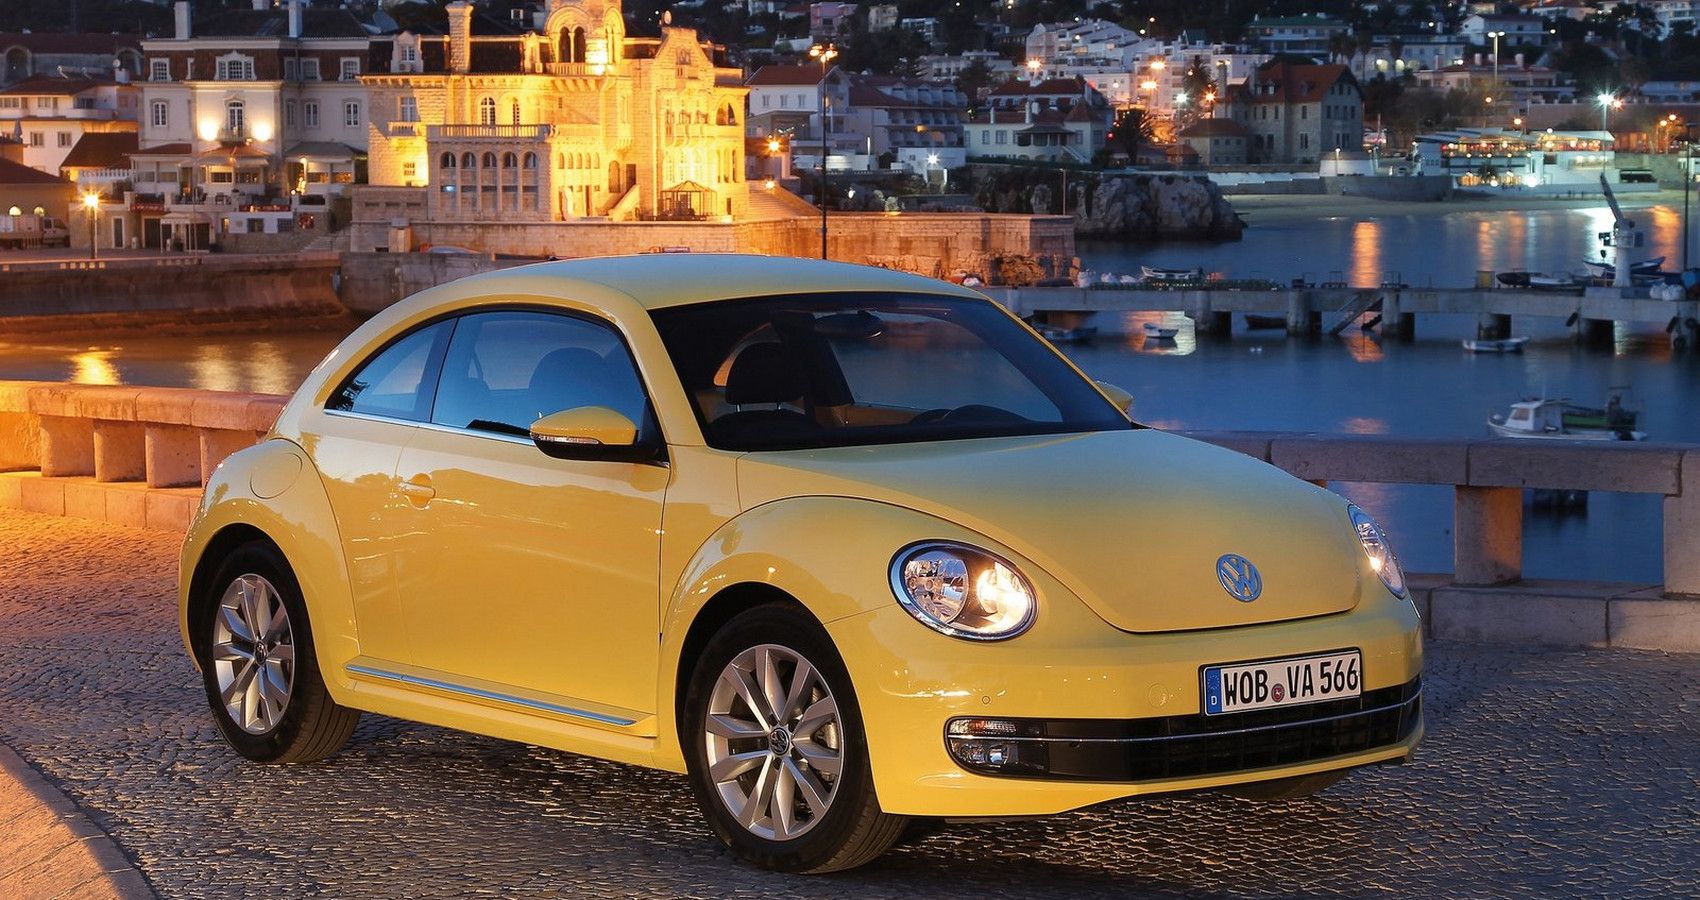 VW Beetle - Front